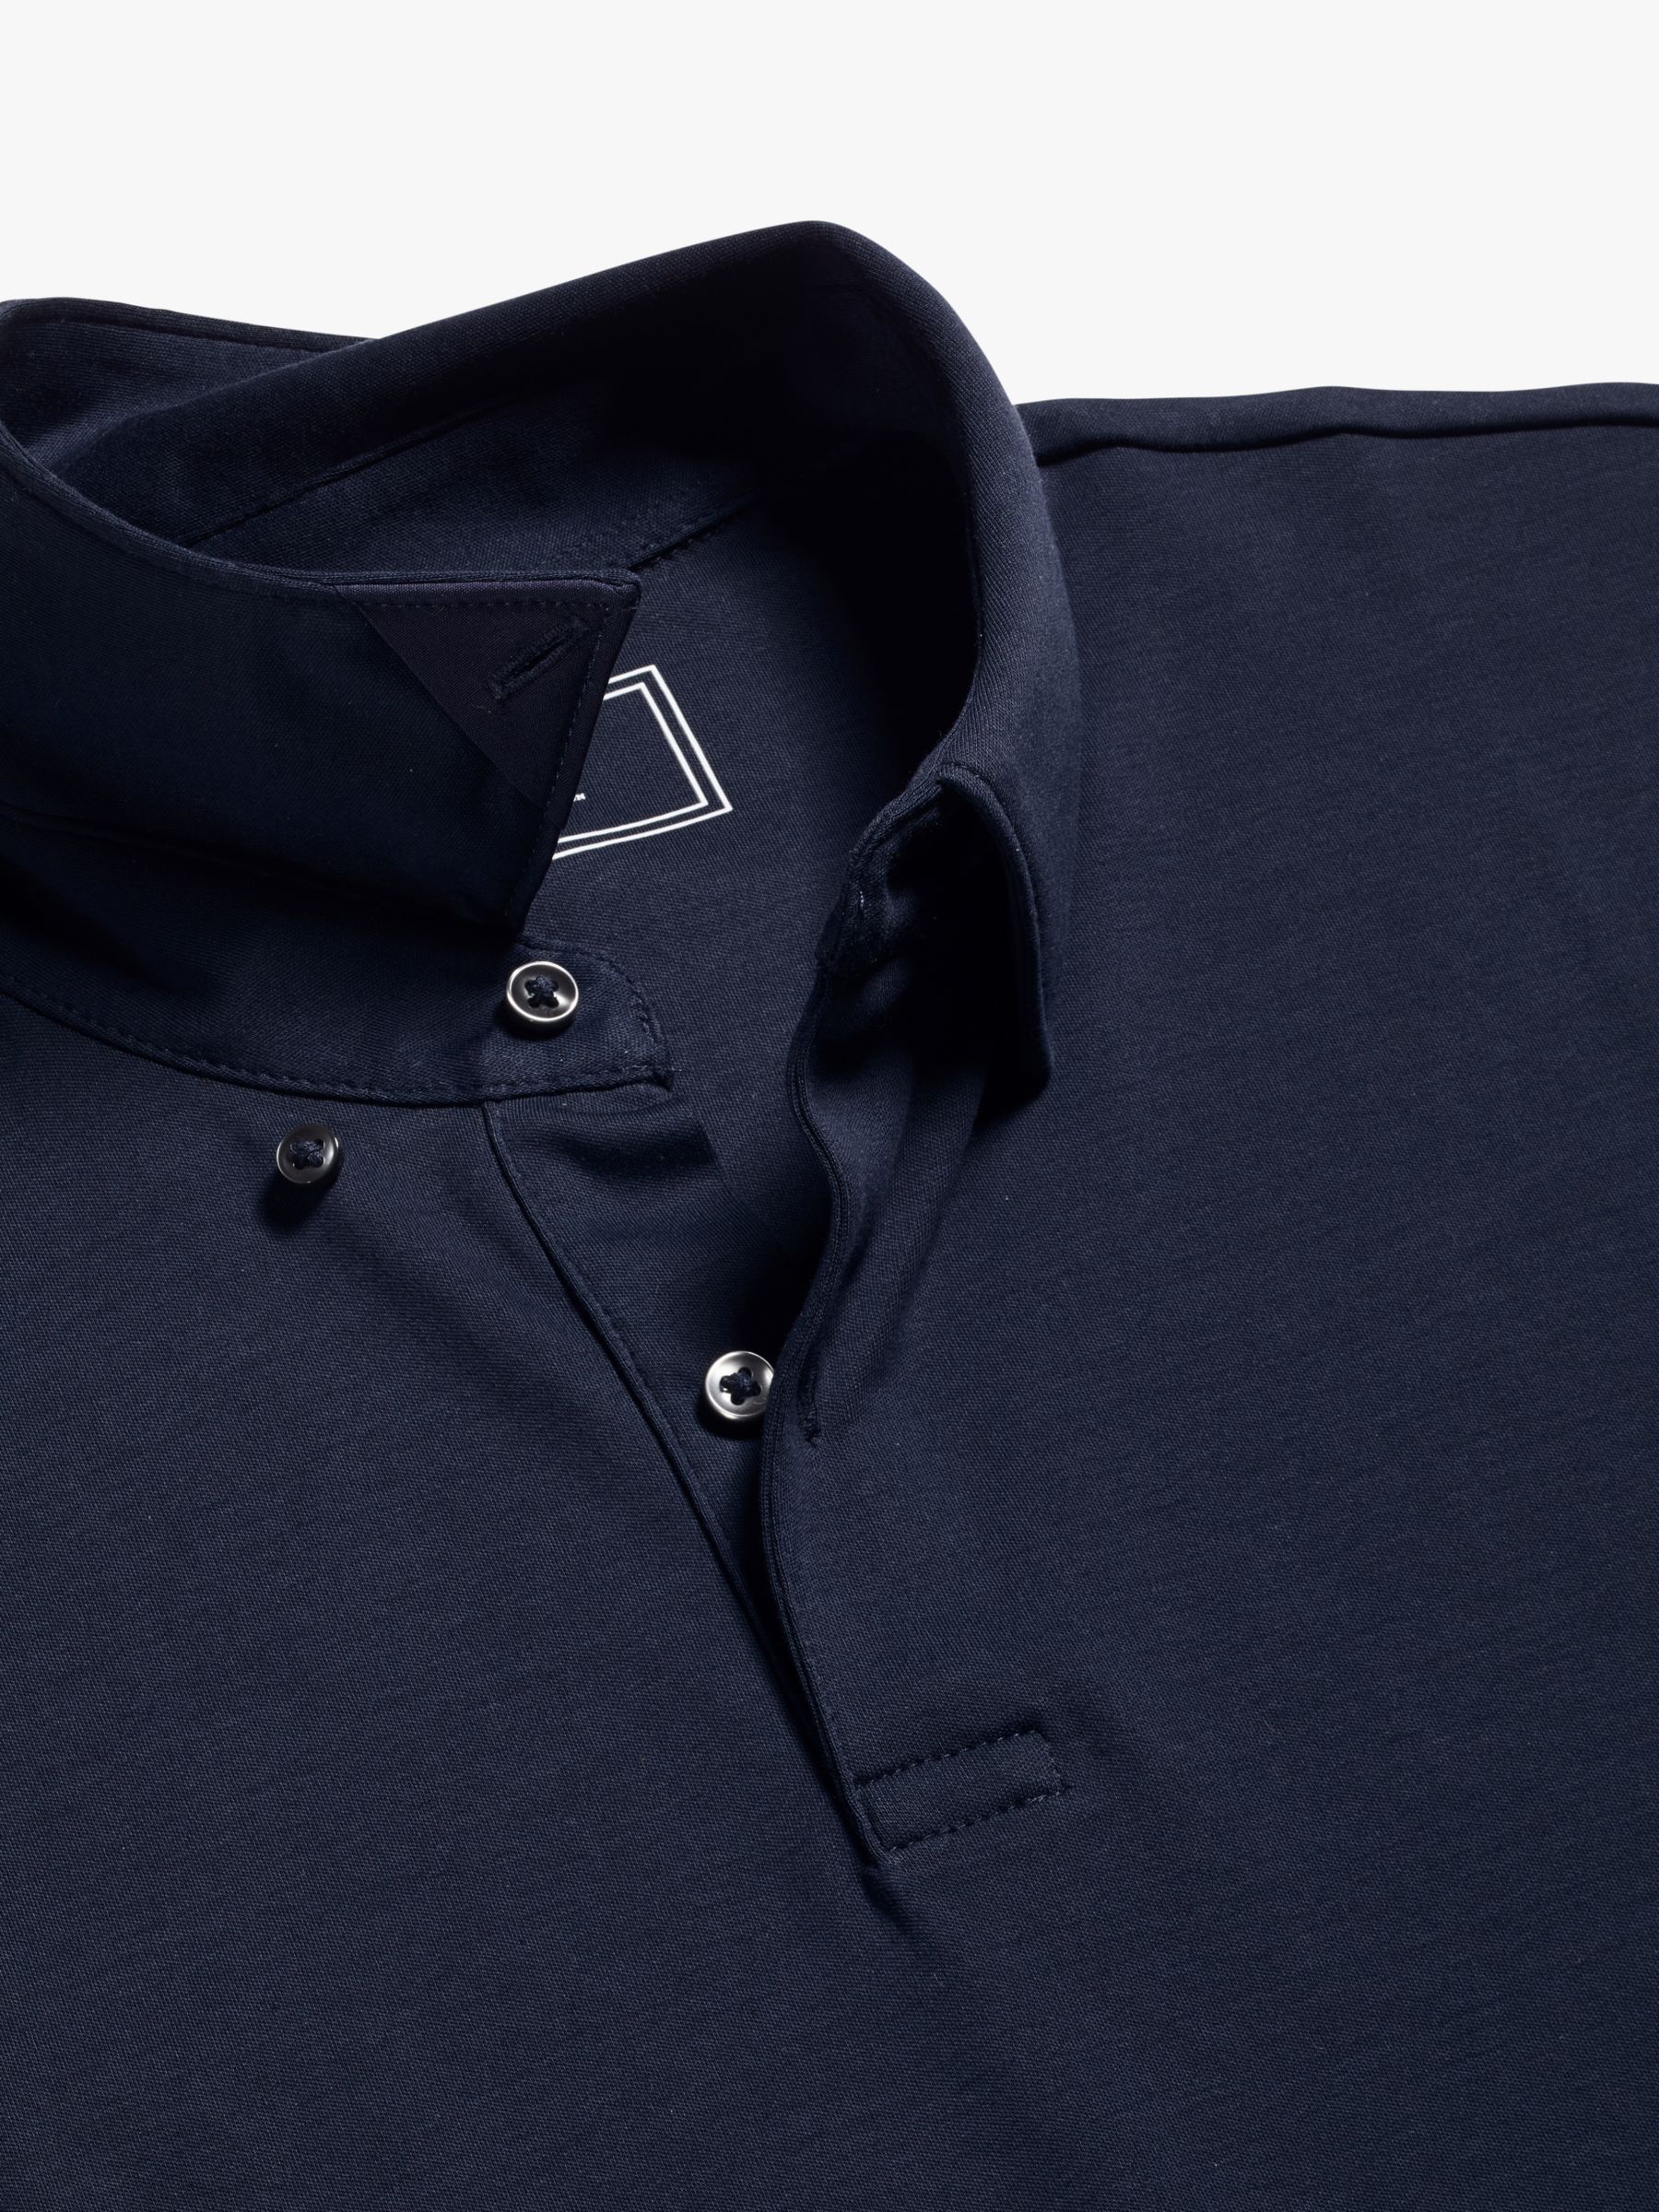 Charles Tyrwhitt Smart Long Sleeve Jersey Polo, Navy Blue, S